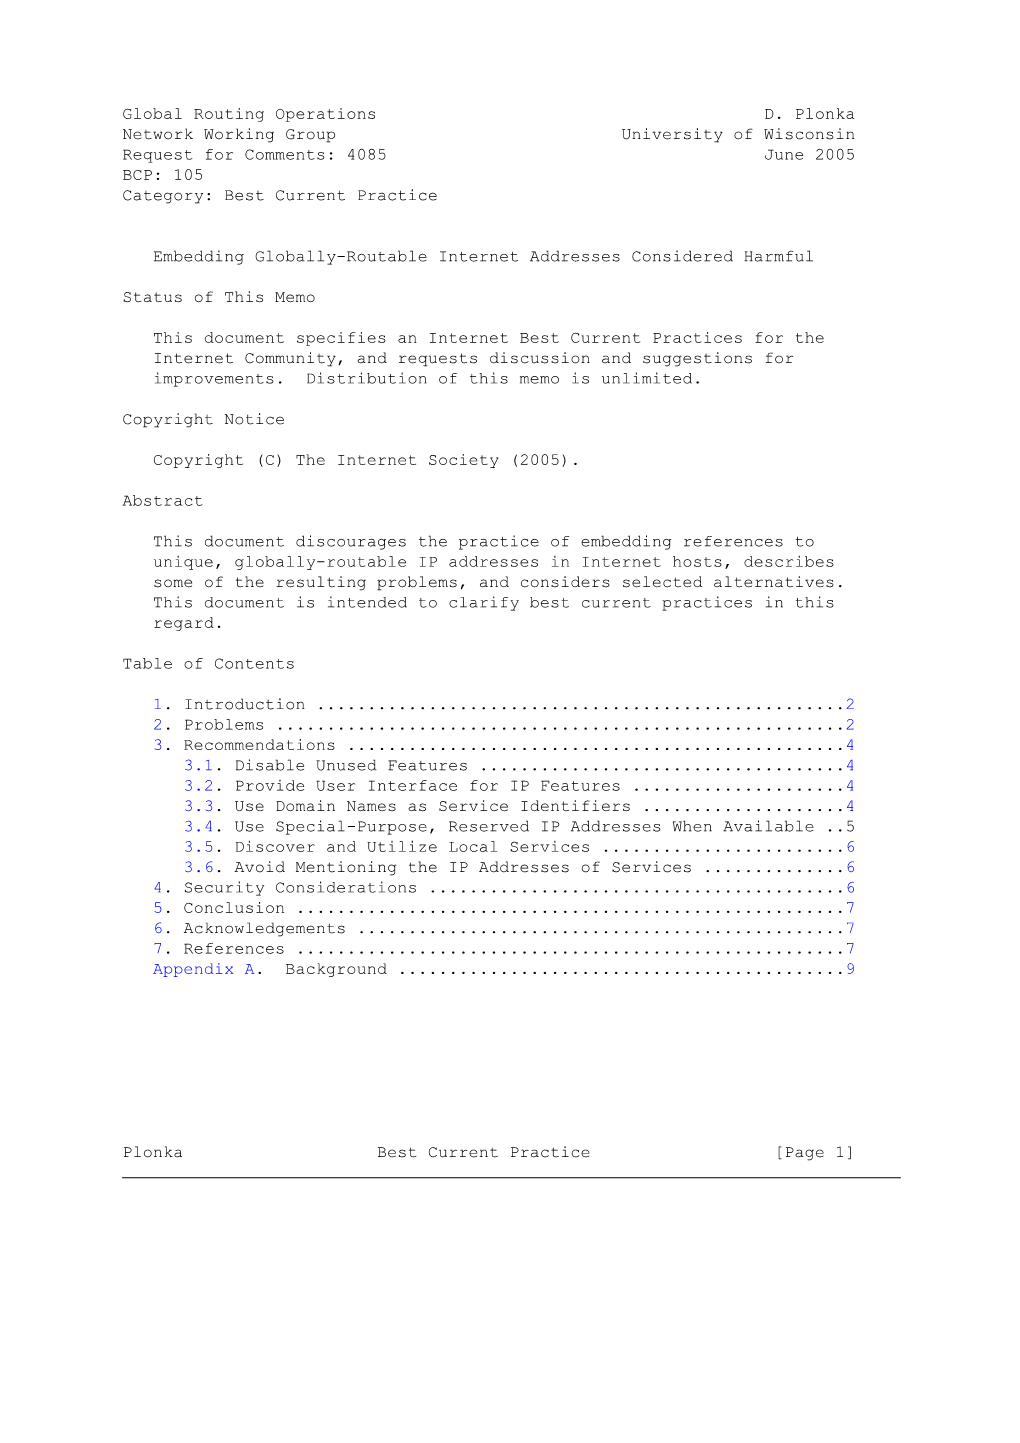 RFC 4085 Embedding IP Addresses Considered Harmful June 2005